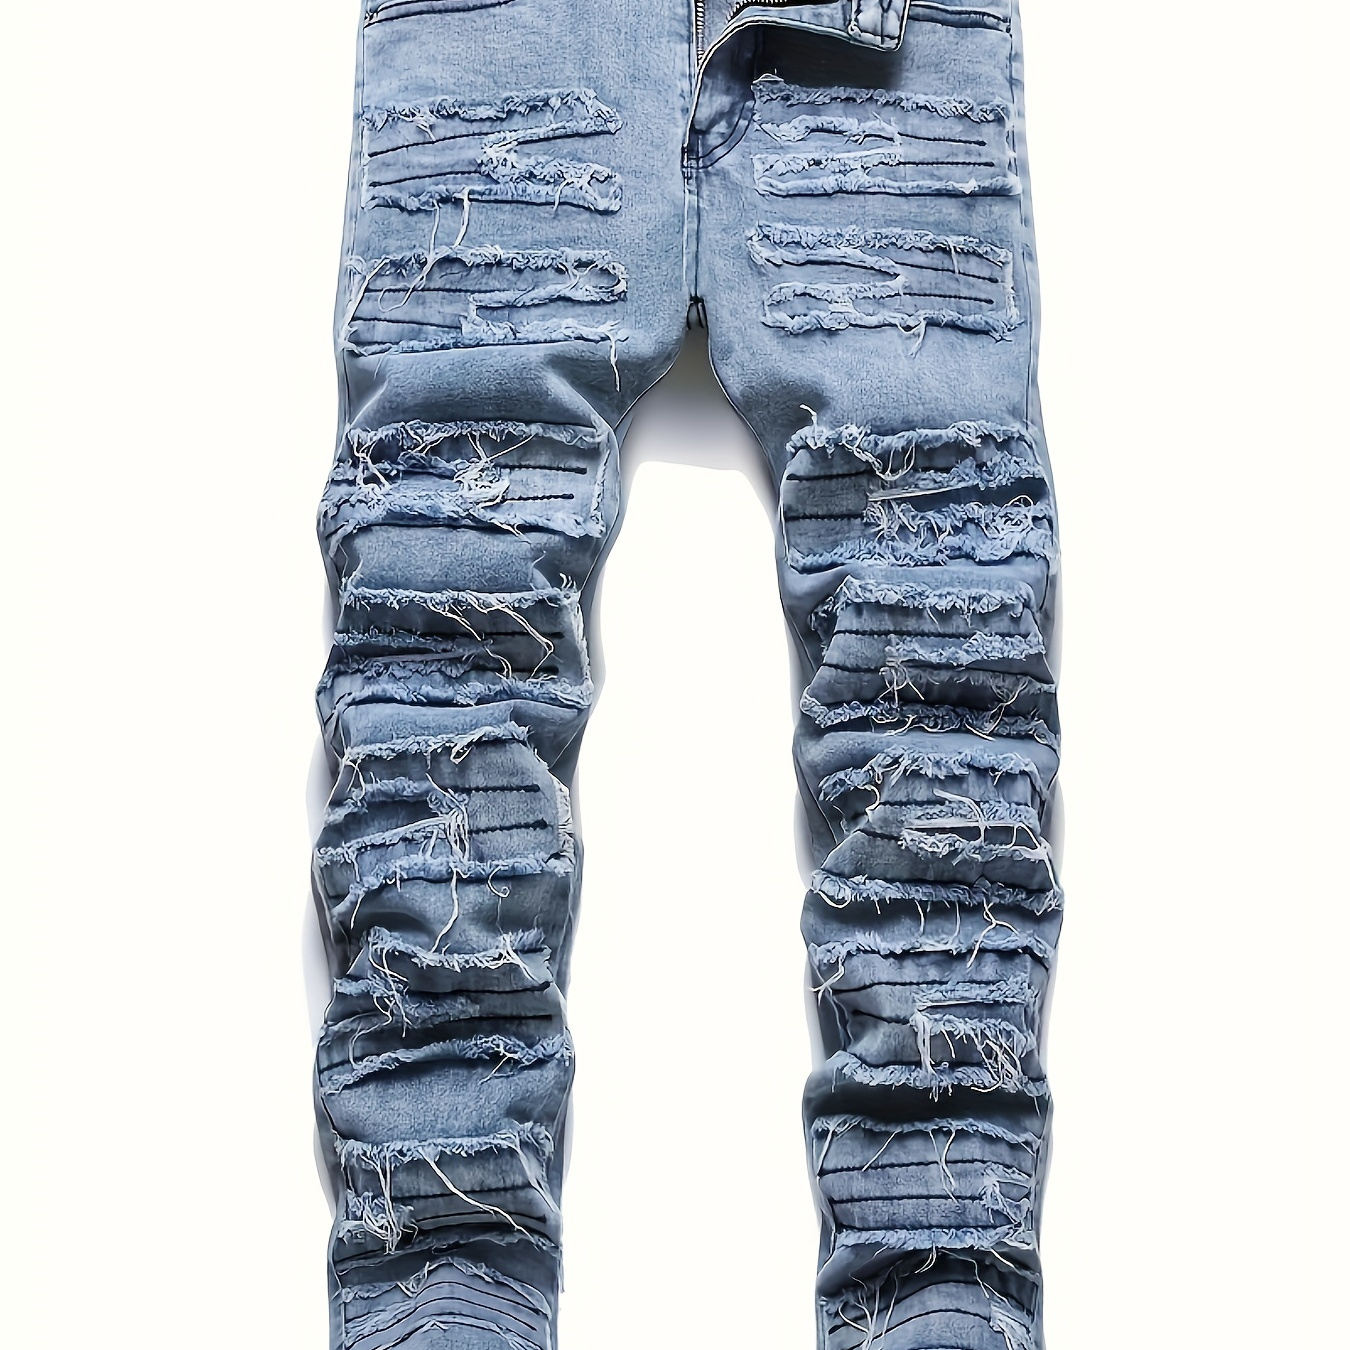 

Slim Fit Jeans With Designed Tassels, Men's Casual Street Style Distressed Medium Stretch Denim Pants